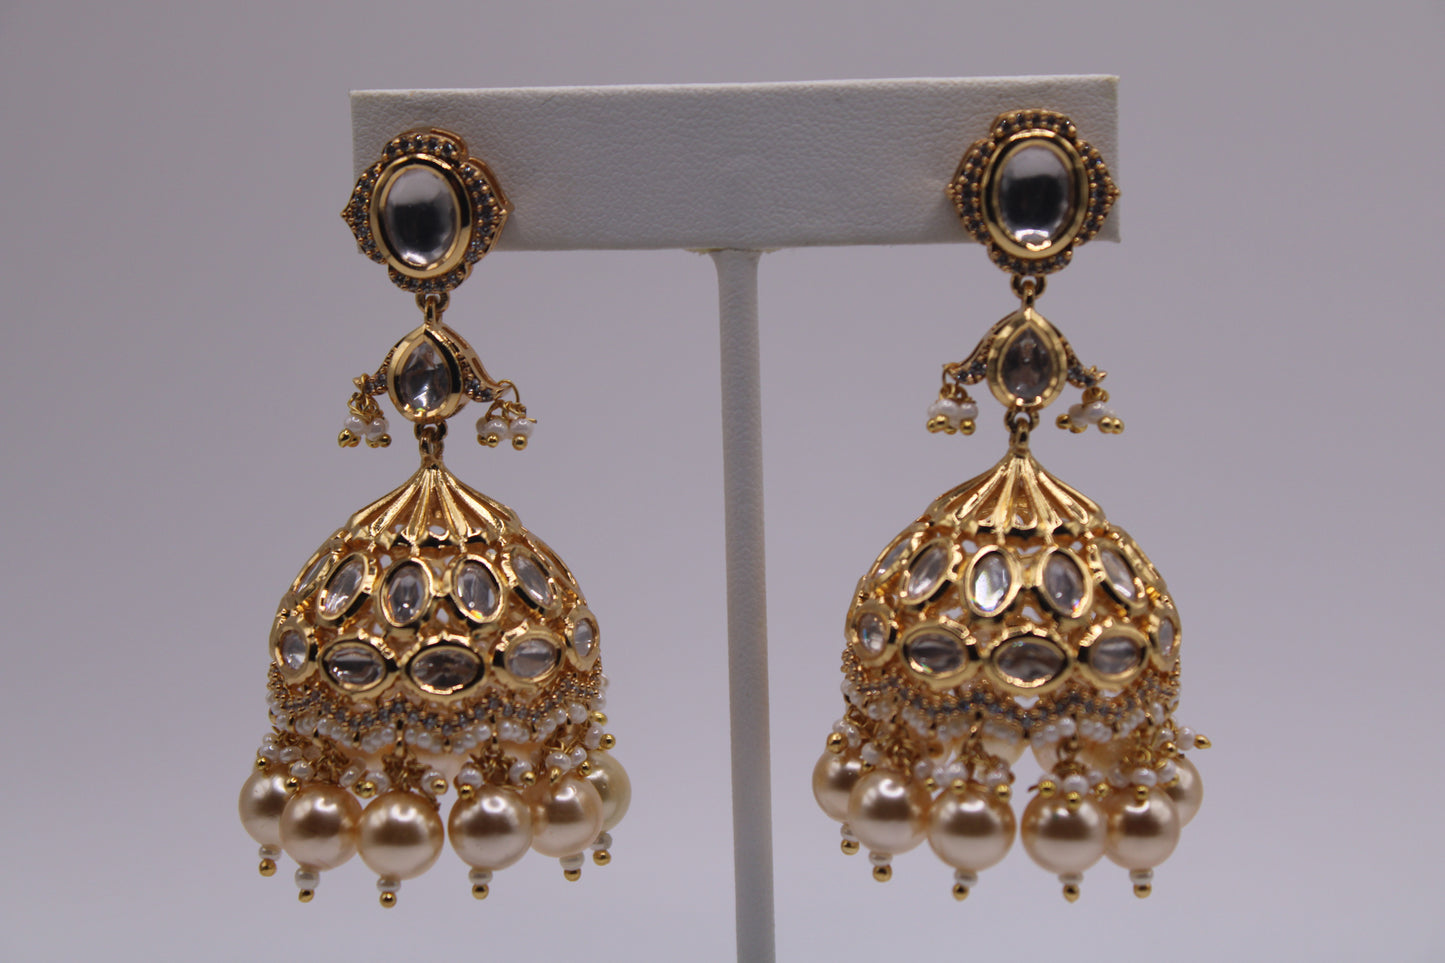 Amira bridal necklace set